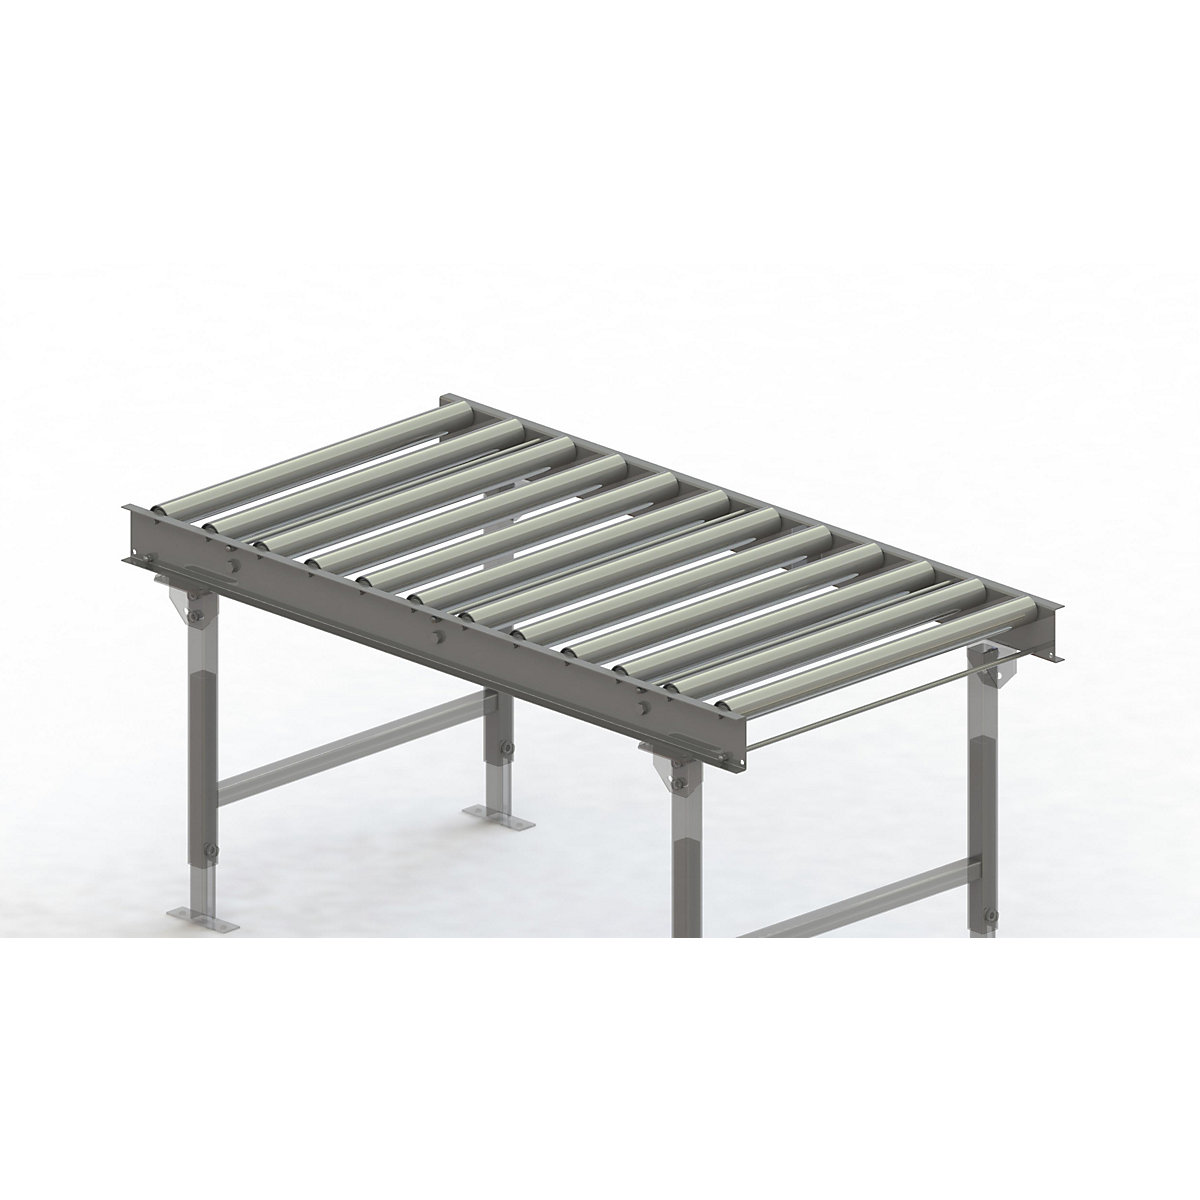 Gura – Roller conveyor, steel frame with zinc plated steel rollers, track width 750 mm, distance between axles 125 mm, length 1.5 m